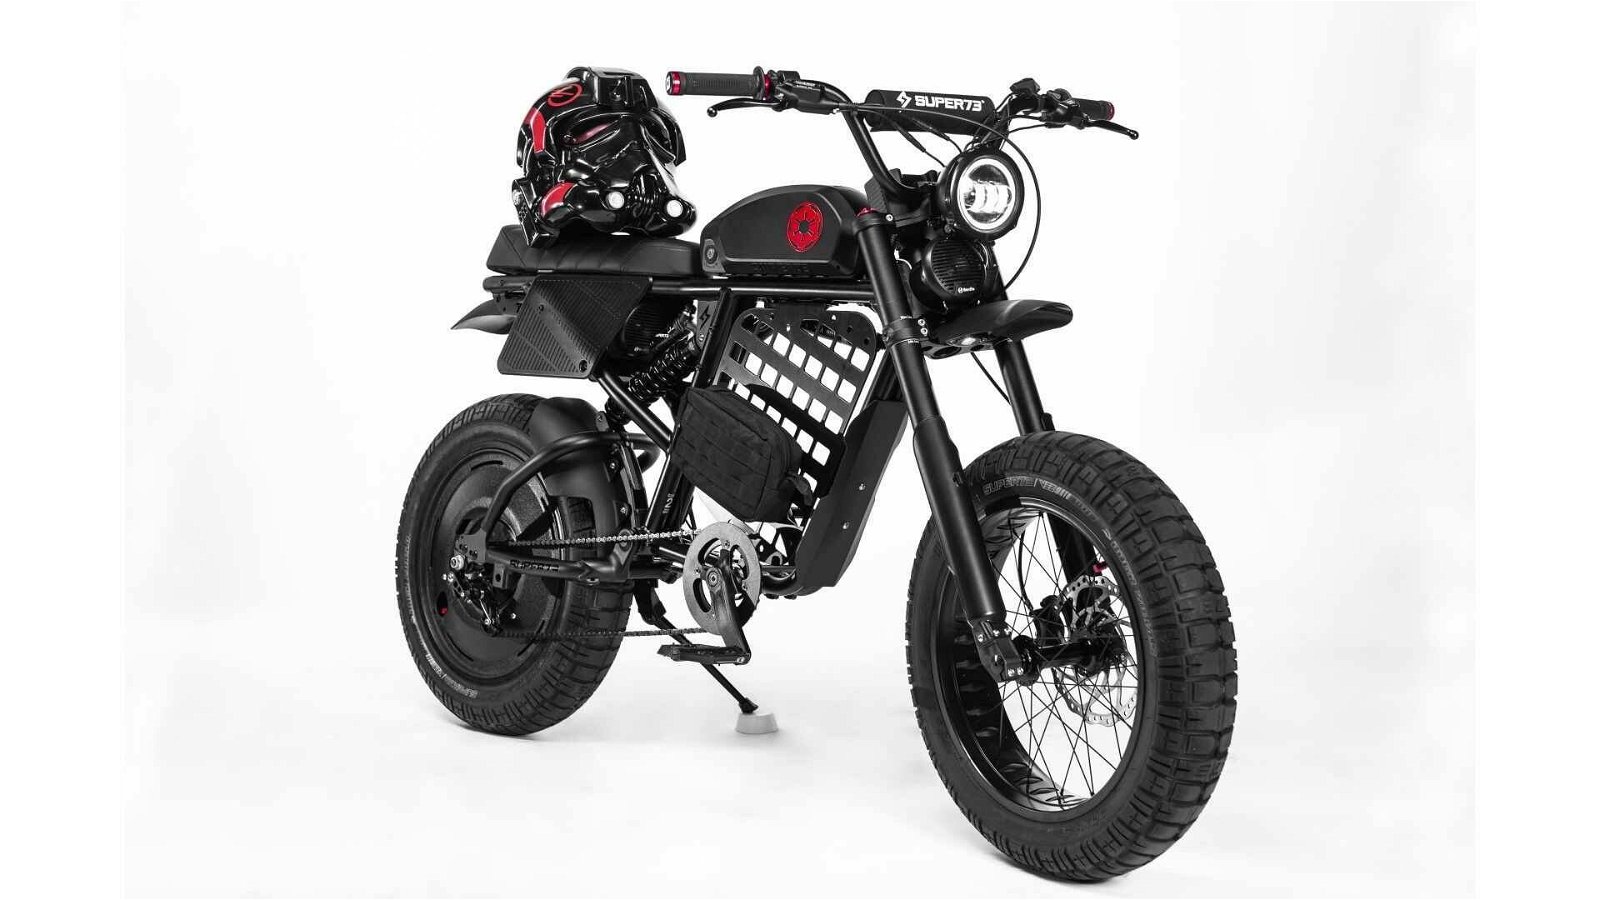 Immagine di Super73 realizza una bici speciale a tema Star Wars